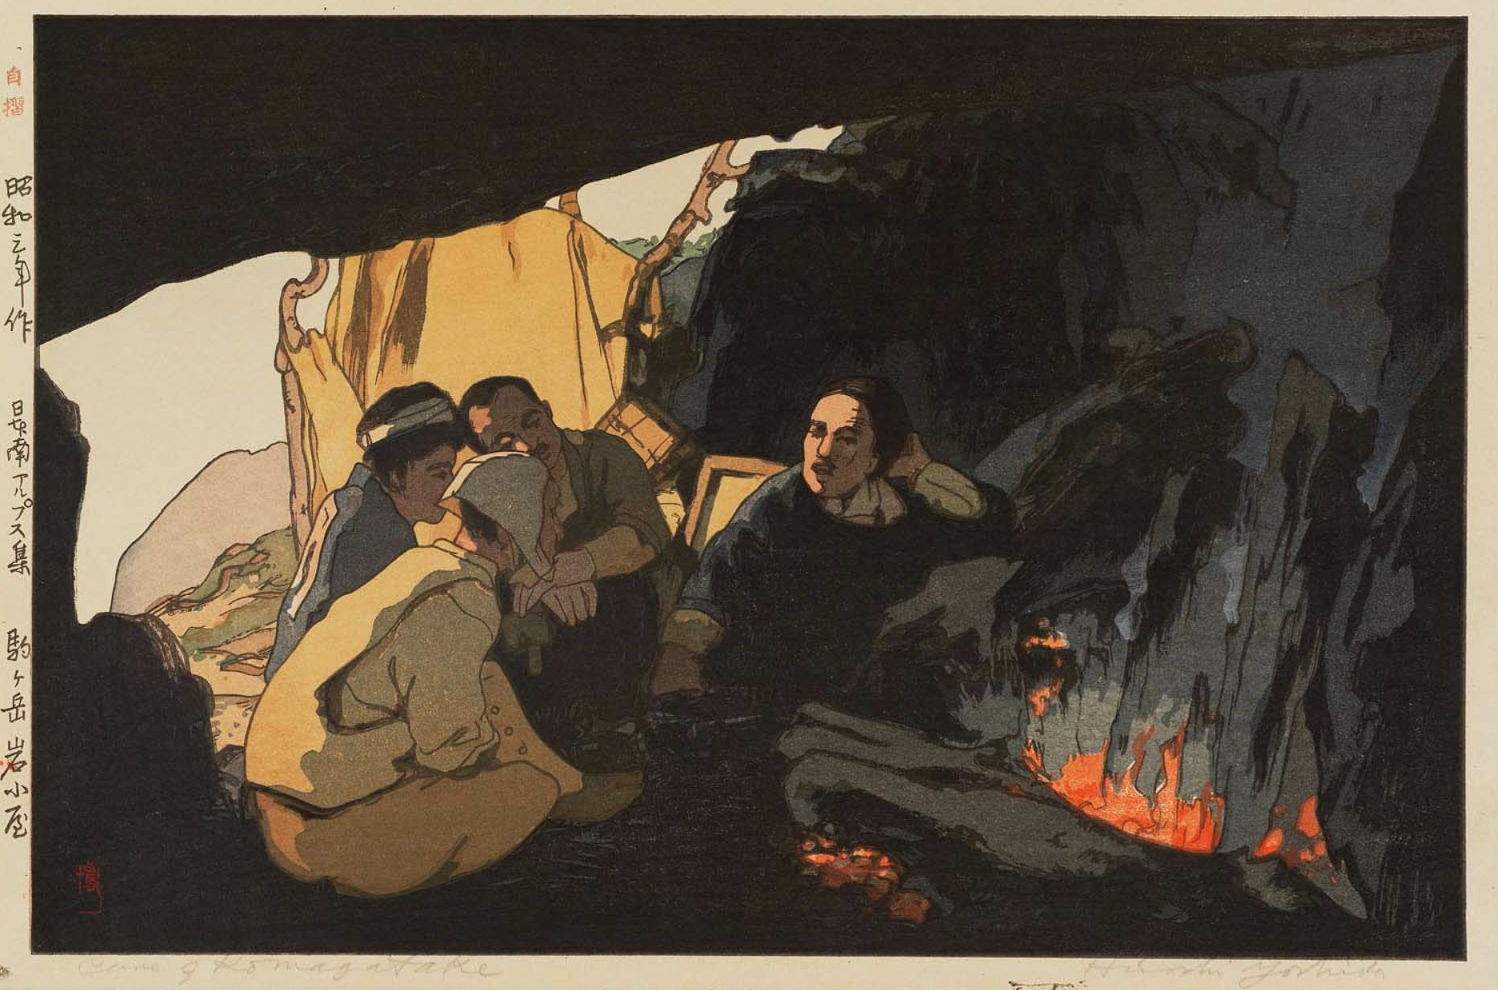 Hiroshi Yoshida “Cave of Komagatake” 1928 woodblock print